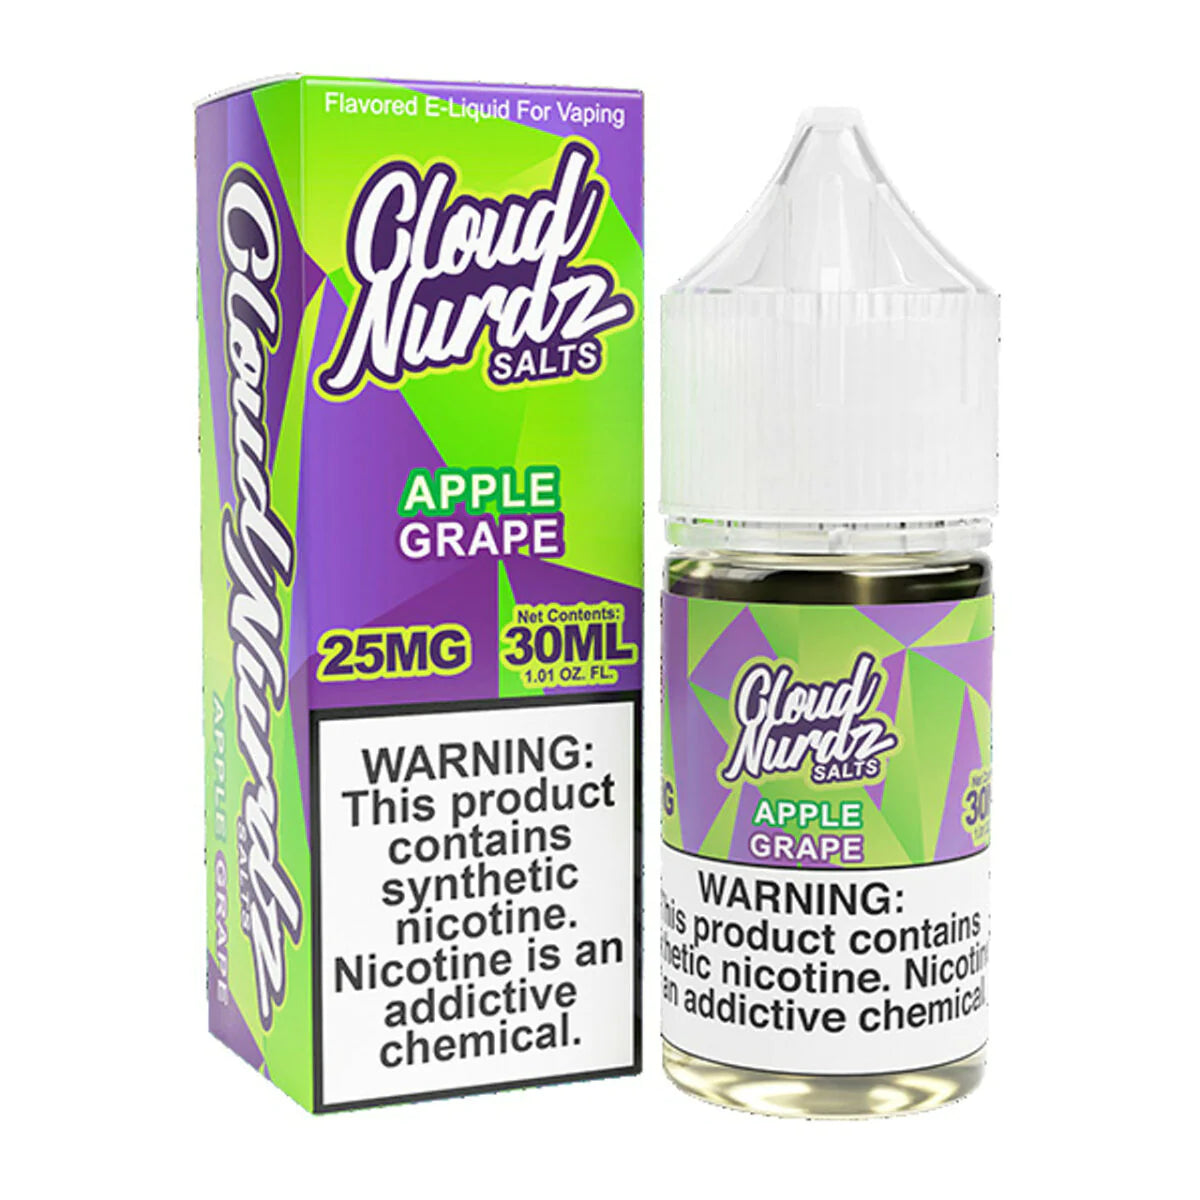 Cloud Nurdz Salts Tobacco-Free Nicotine Salt E-Liquid 30ML - Apple Grape 